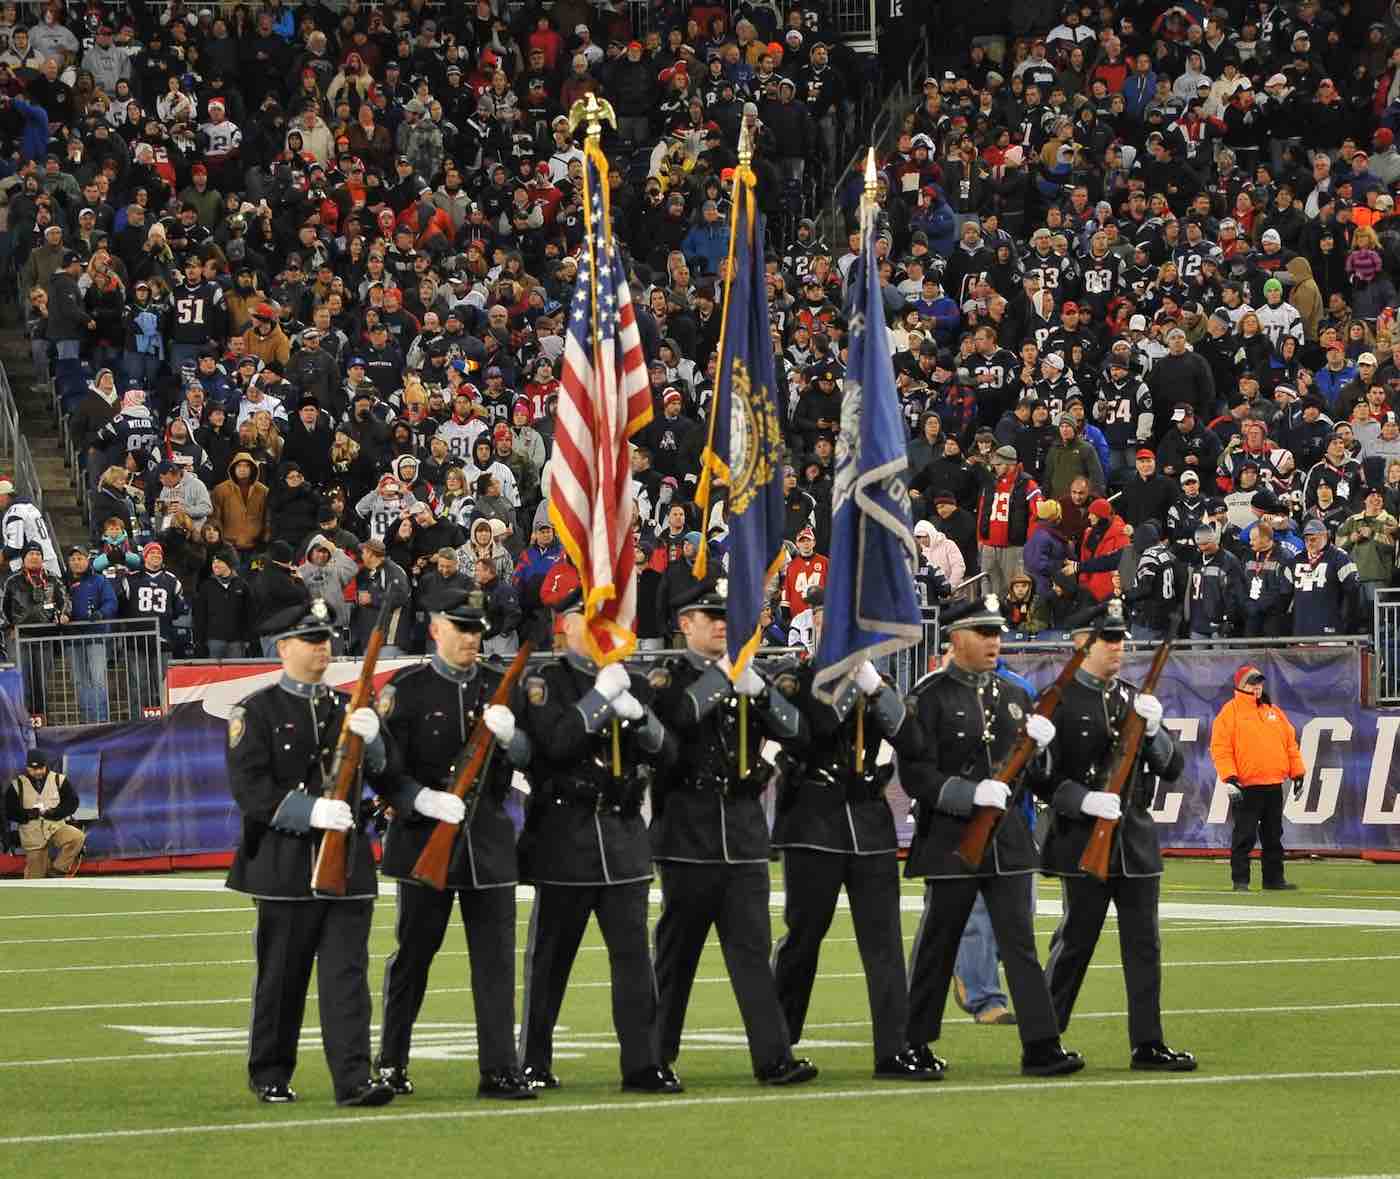 Honor Guard presenting colors at a Patriots Game